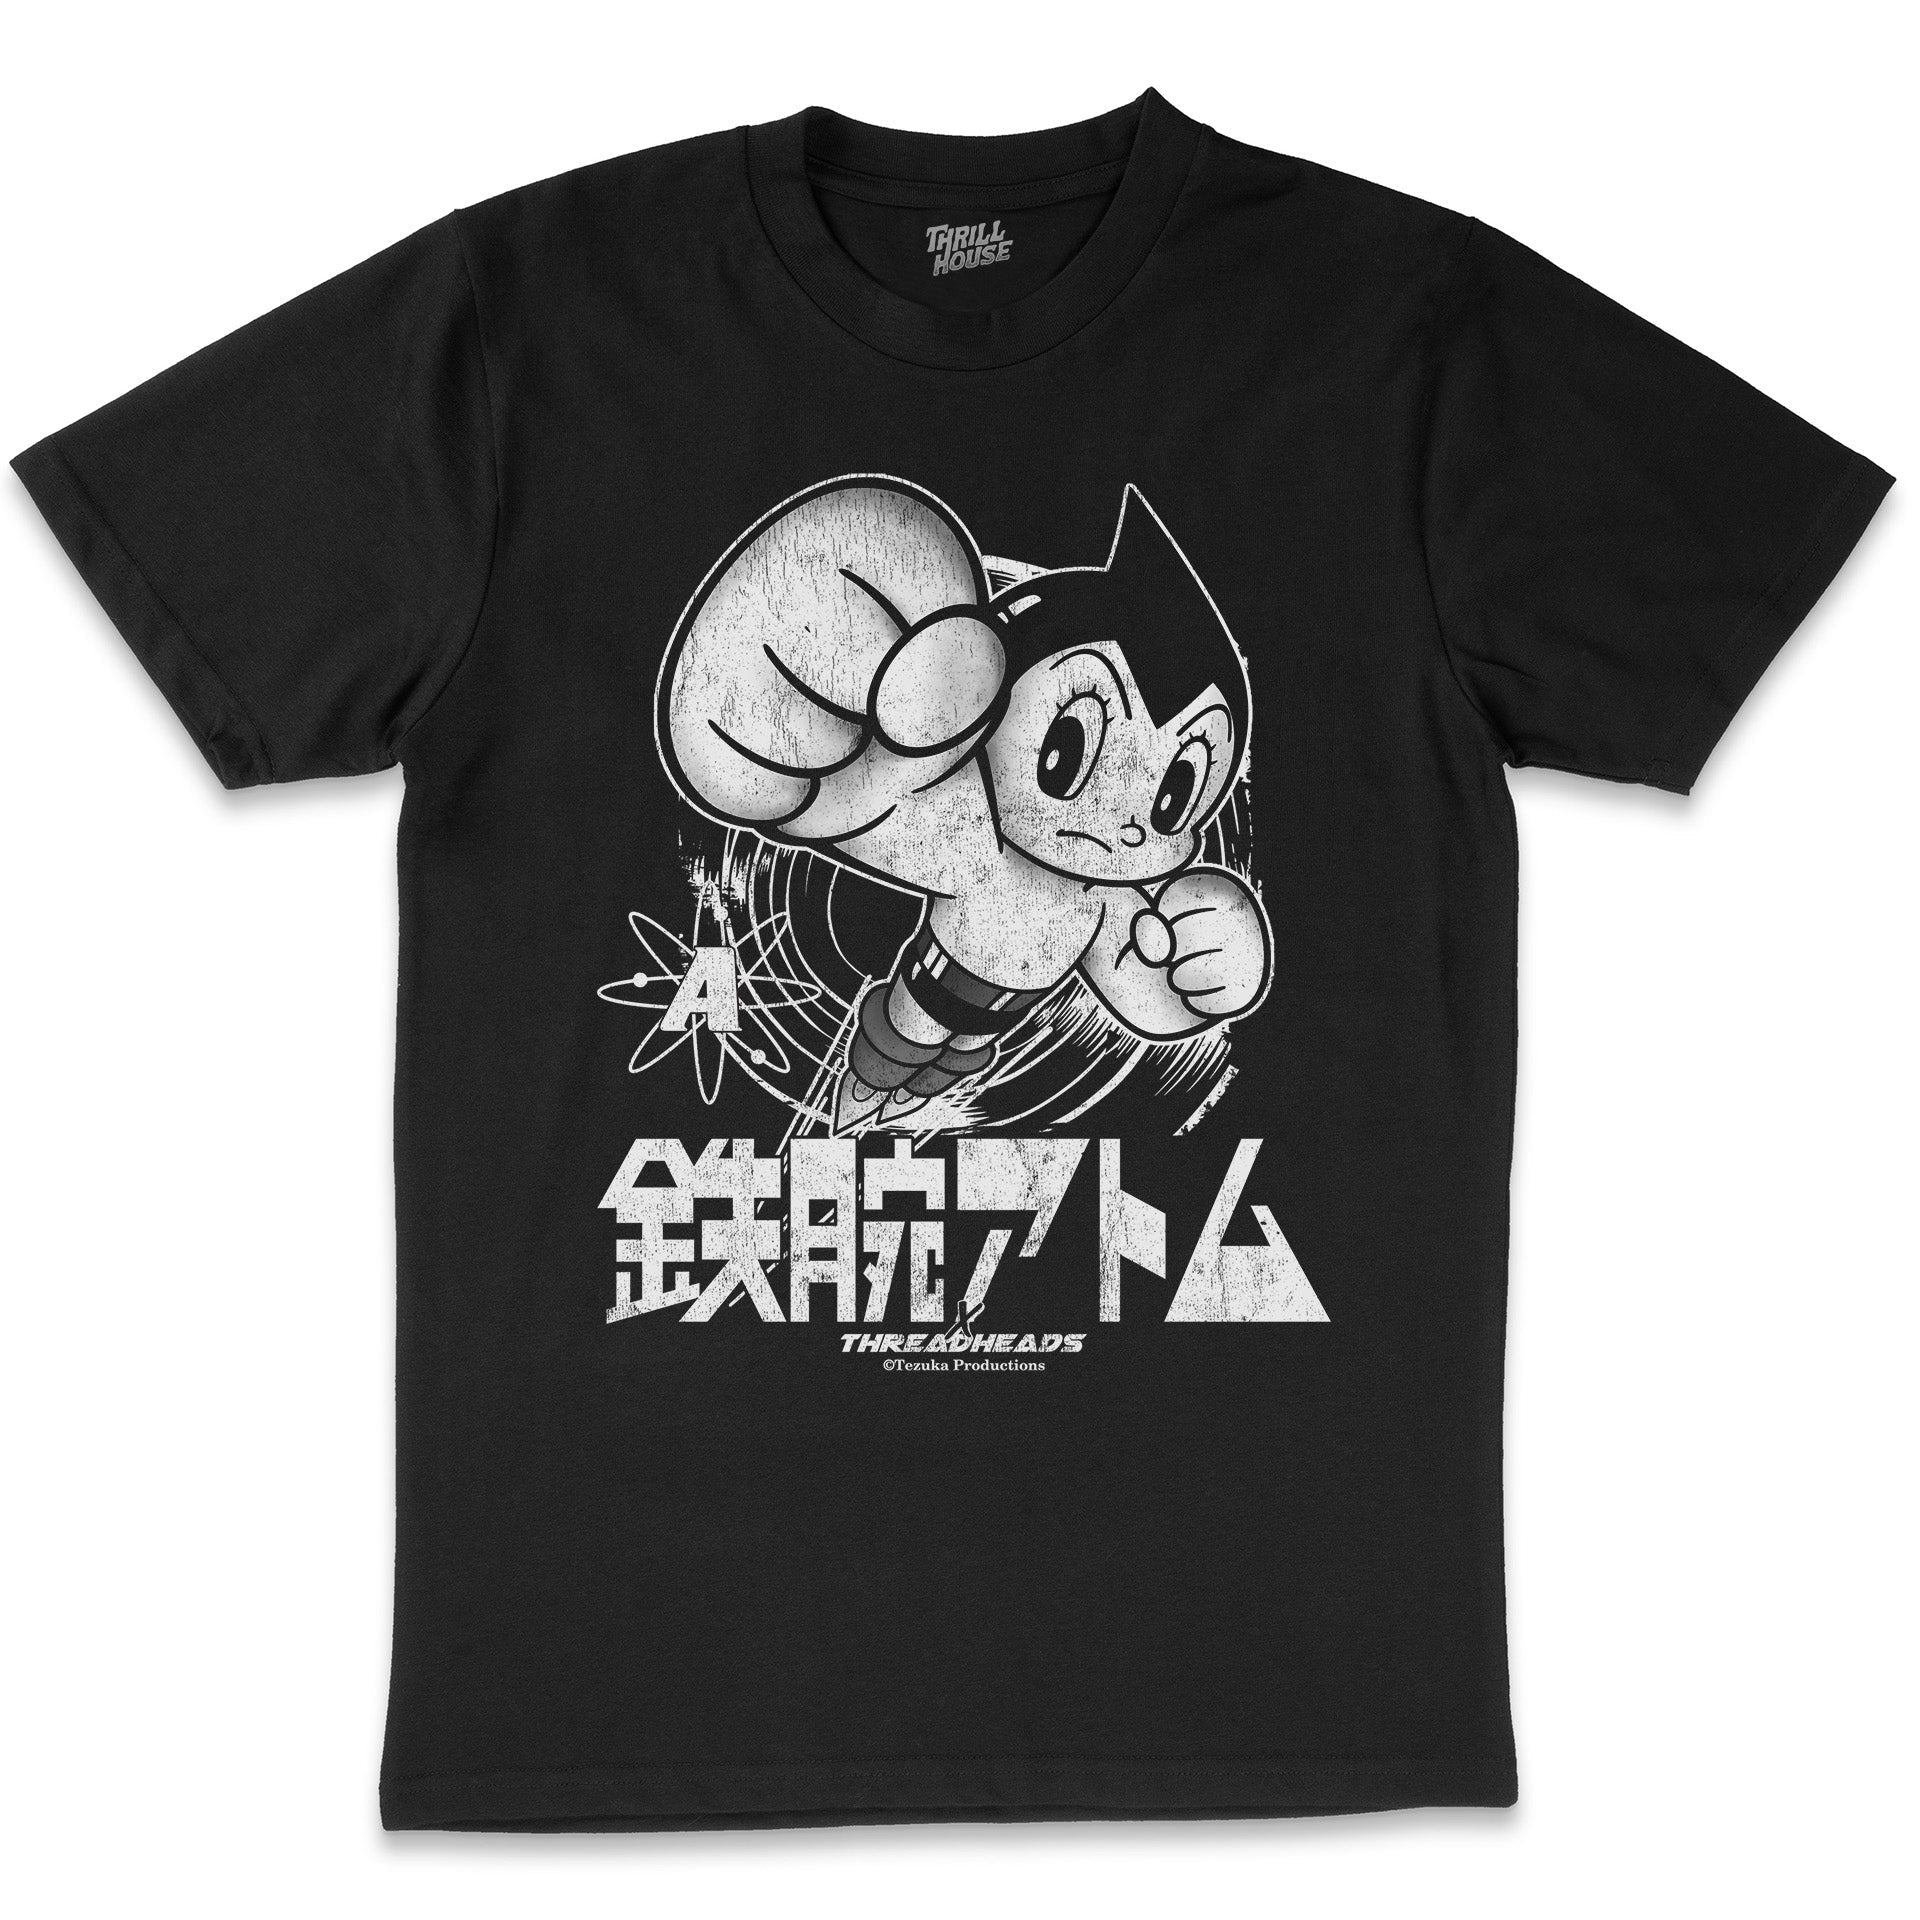 Astro Boy Japanese Cartoon Manga Comic Book Anime Classic Retro Vintage Officially Licensed Cotton T-Shirt